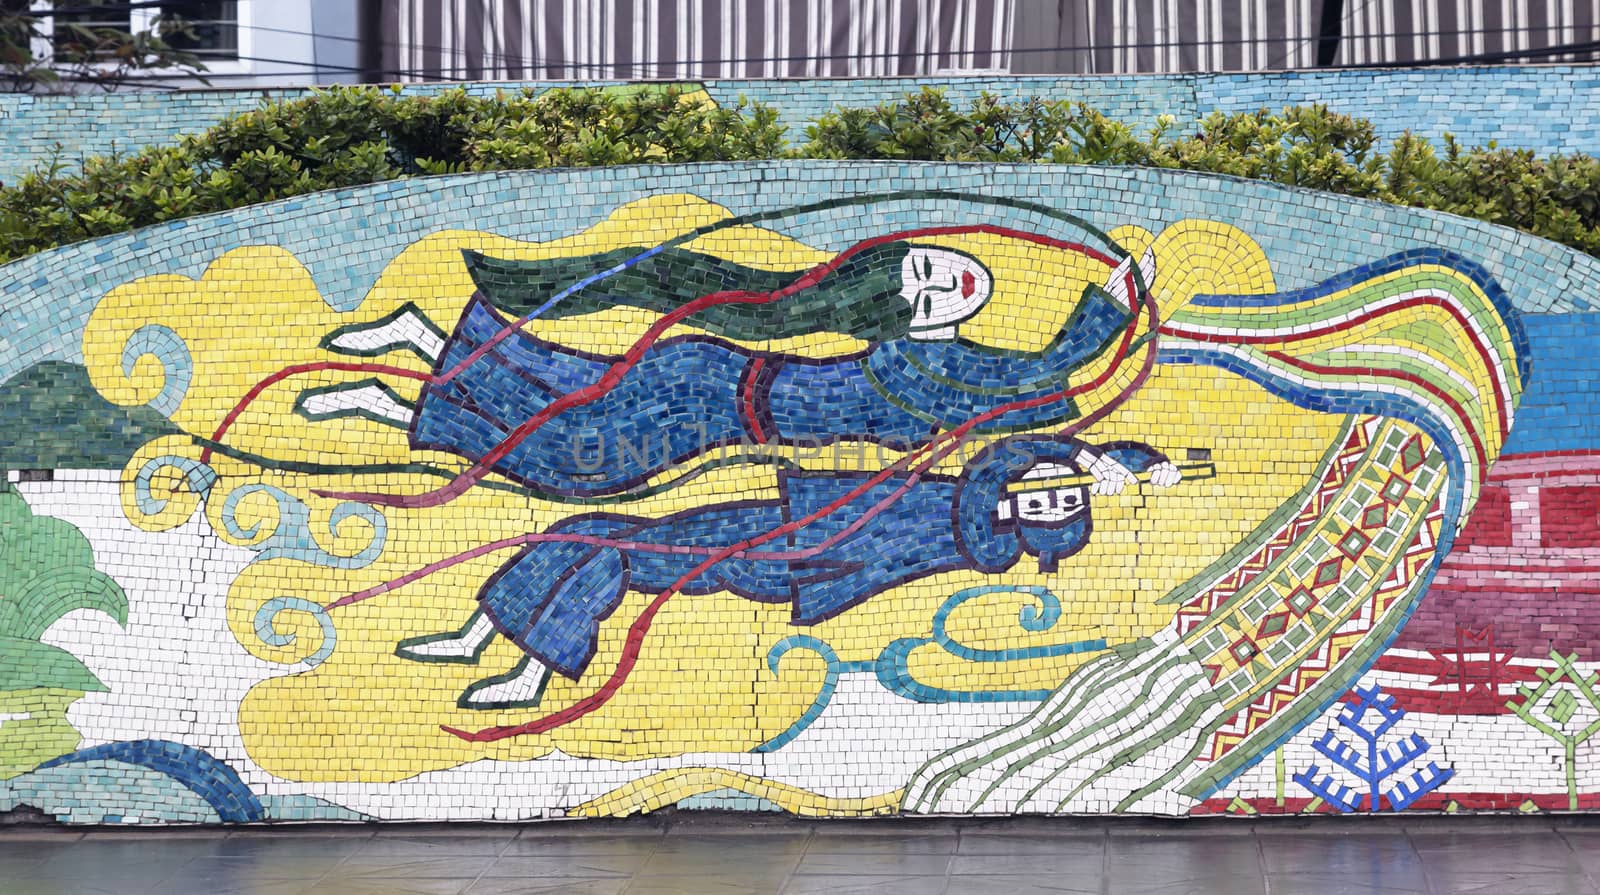 Hanoi, VIETNAM - JANUARY 12, 2015 - Ceramic mosaic mural in Hanoi, the giant art-project of 2007-2010